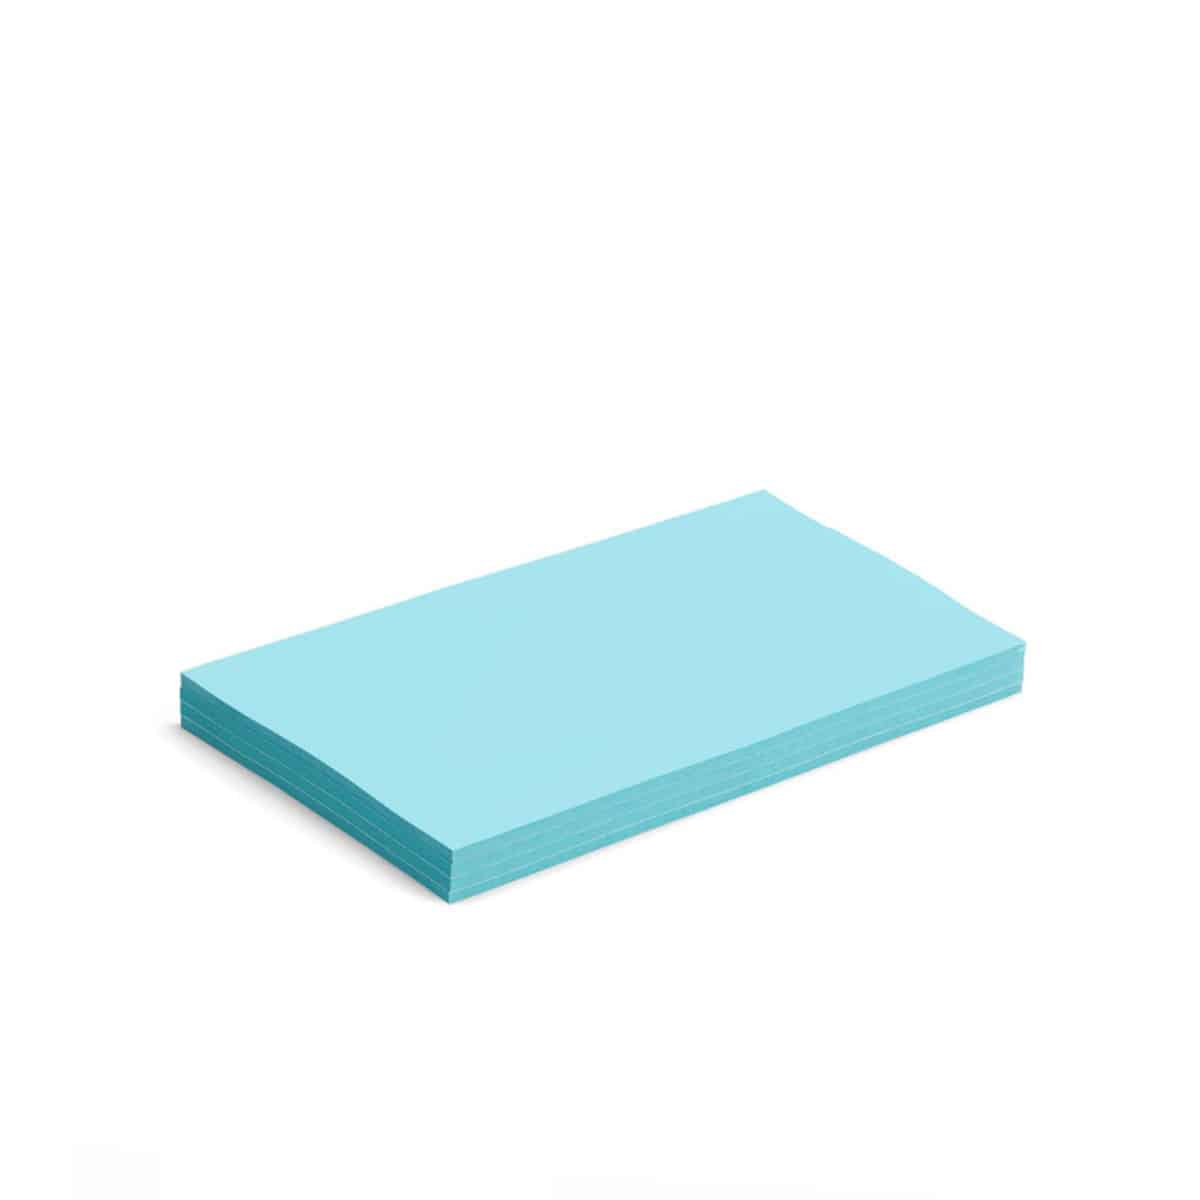 Stick- It Cards, large rectangular, 100 sheets, single colors- 3 blau